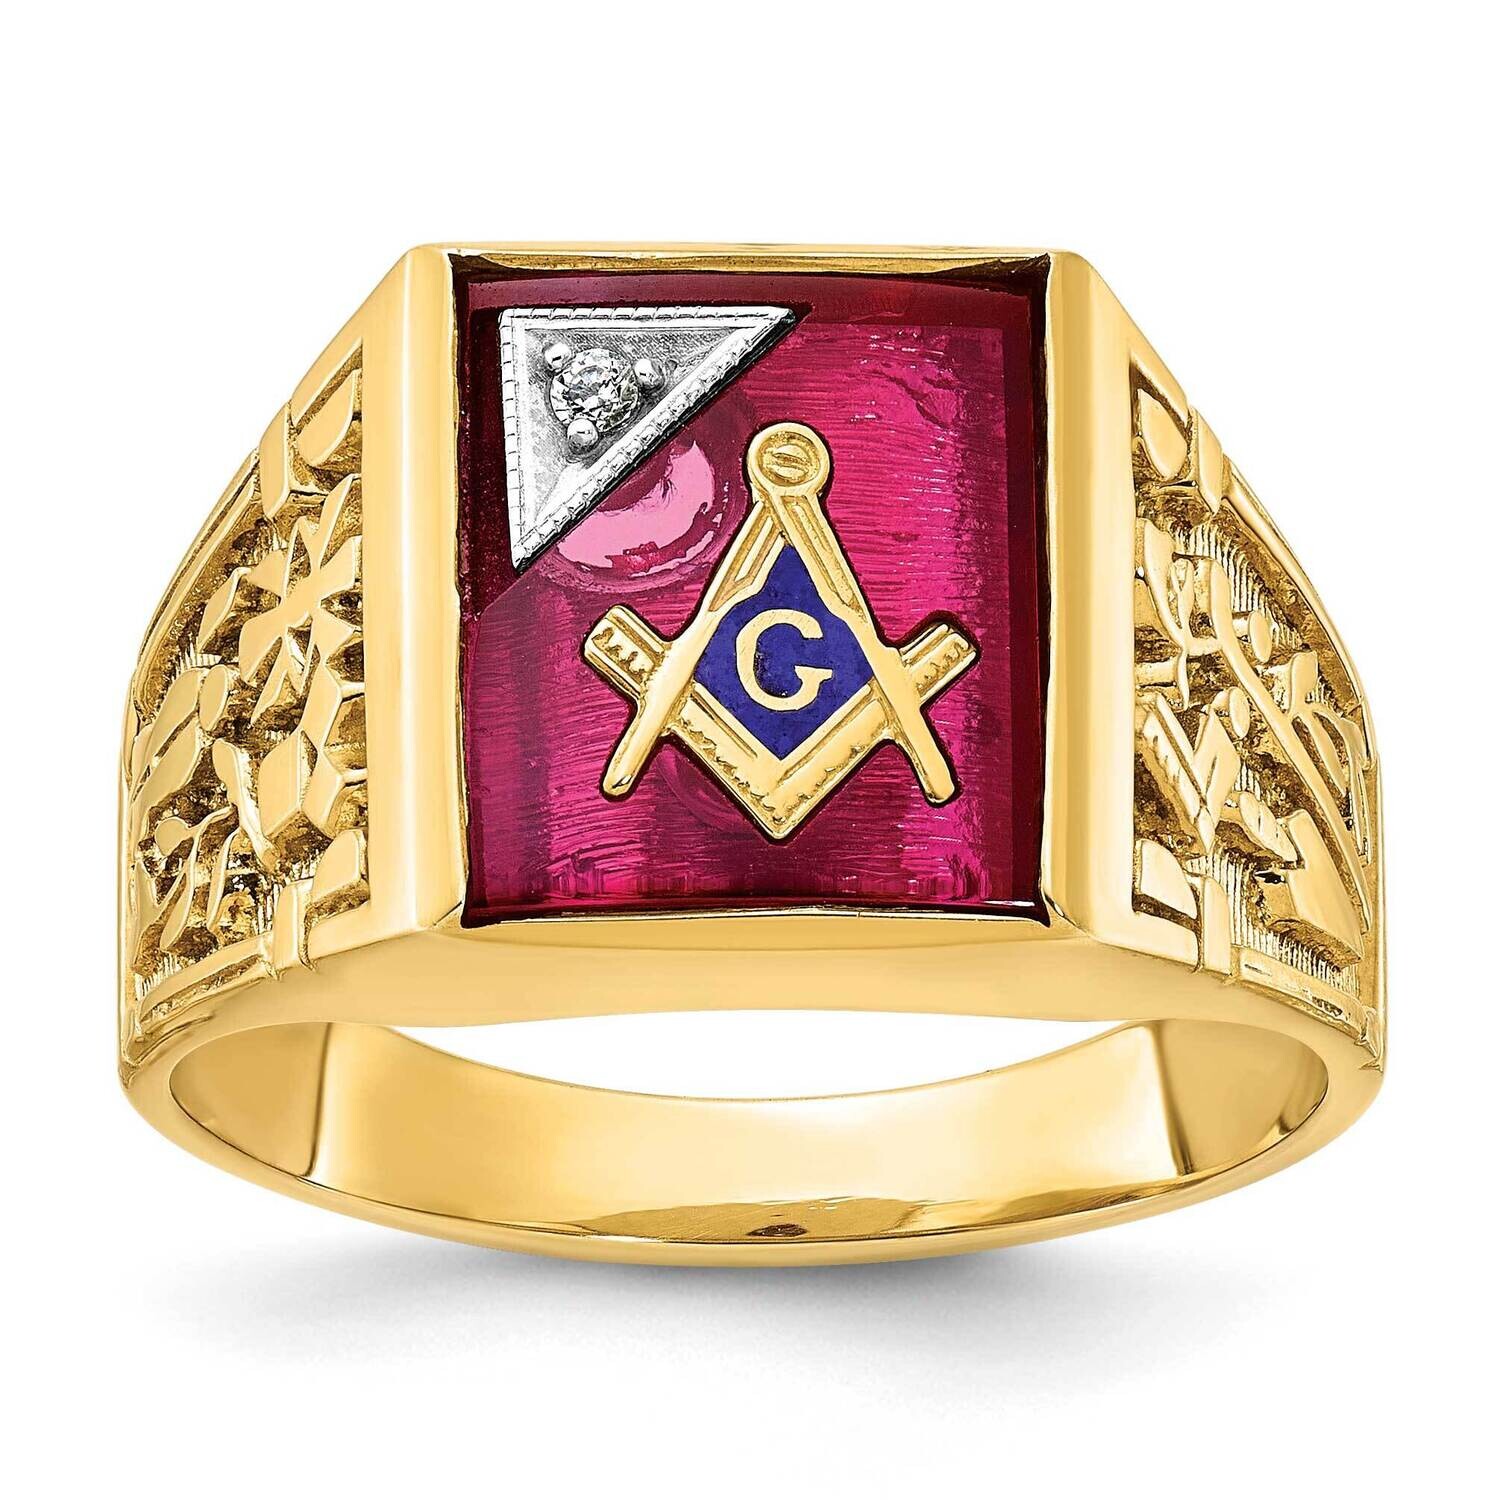 Ibgoodman Men's Polished Textured Blue Lodge Master Masonic Ring Mounting 14k Two-Tone Gold B03214-4YW